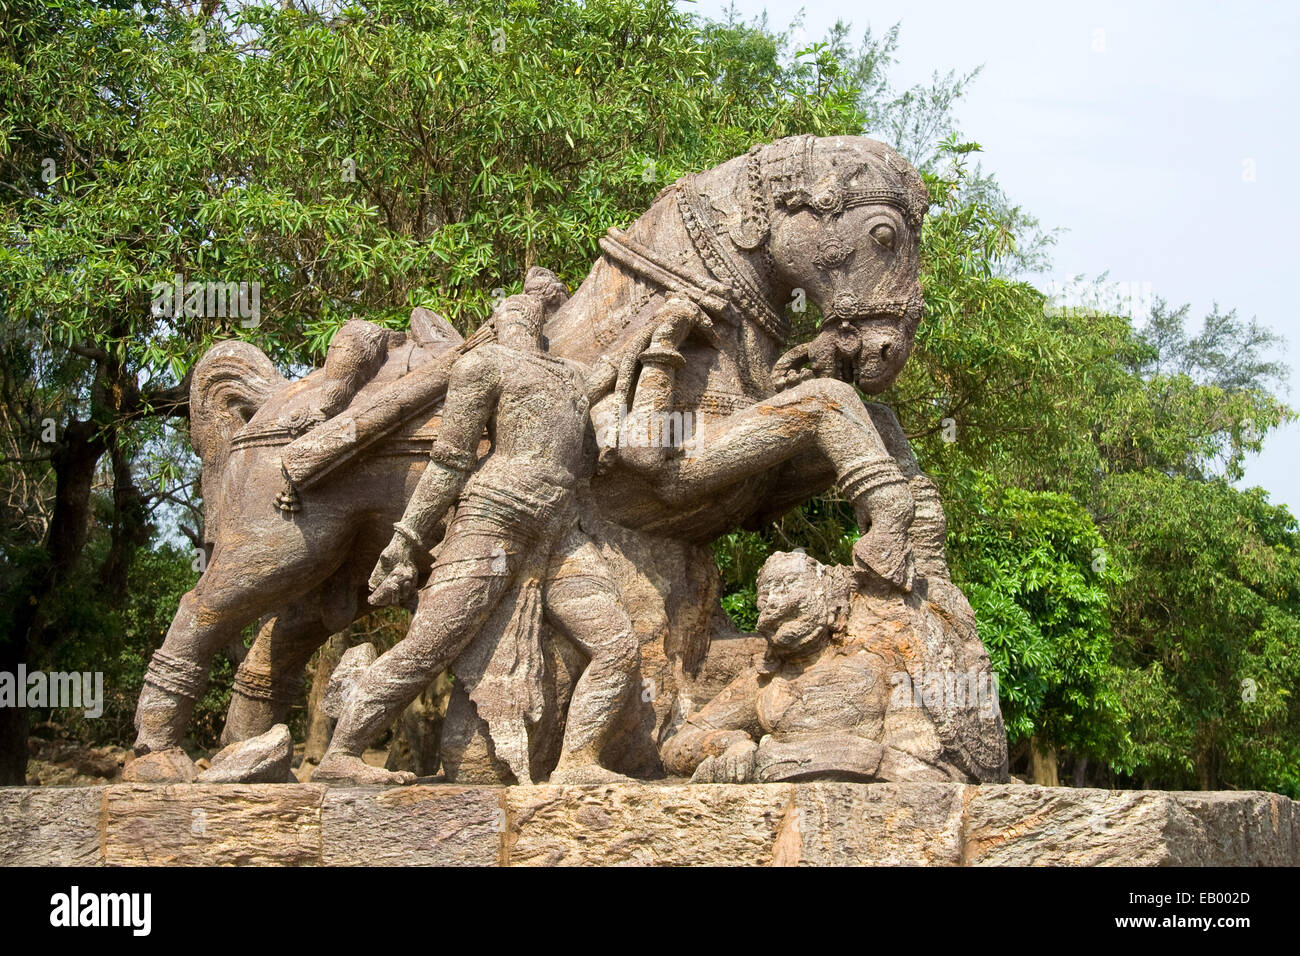 Sculpture of war horse crossing over soldier at Sun Temple, Konark, Orissa, India, Asia Stock Photo